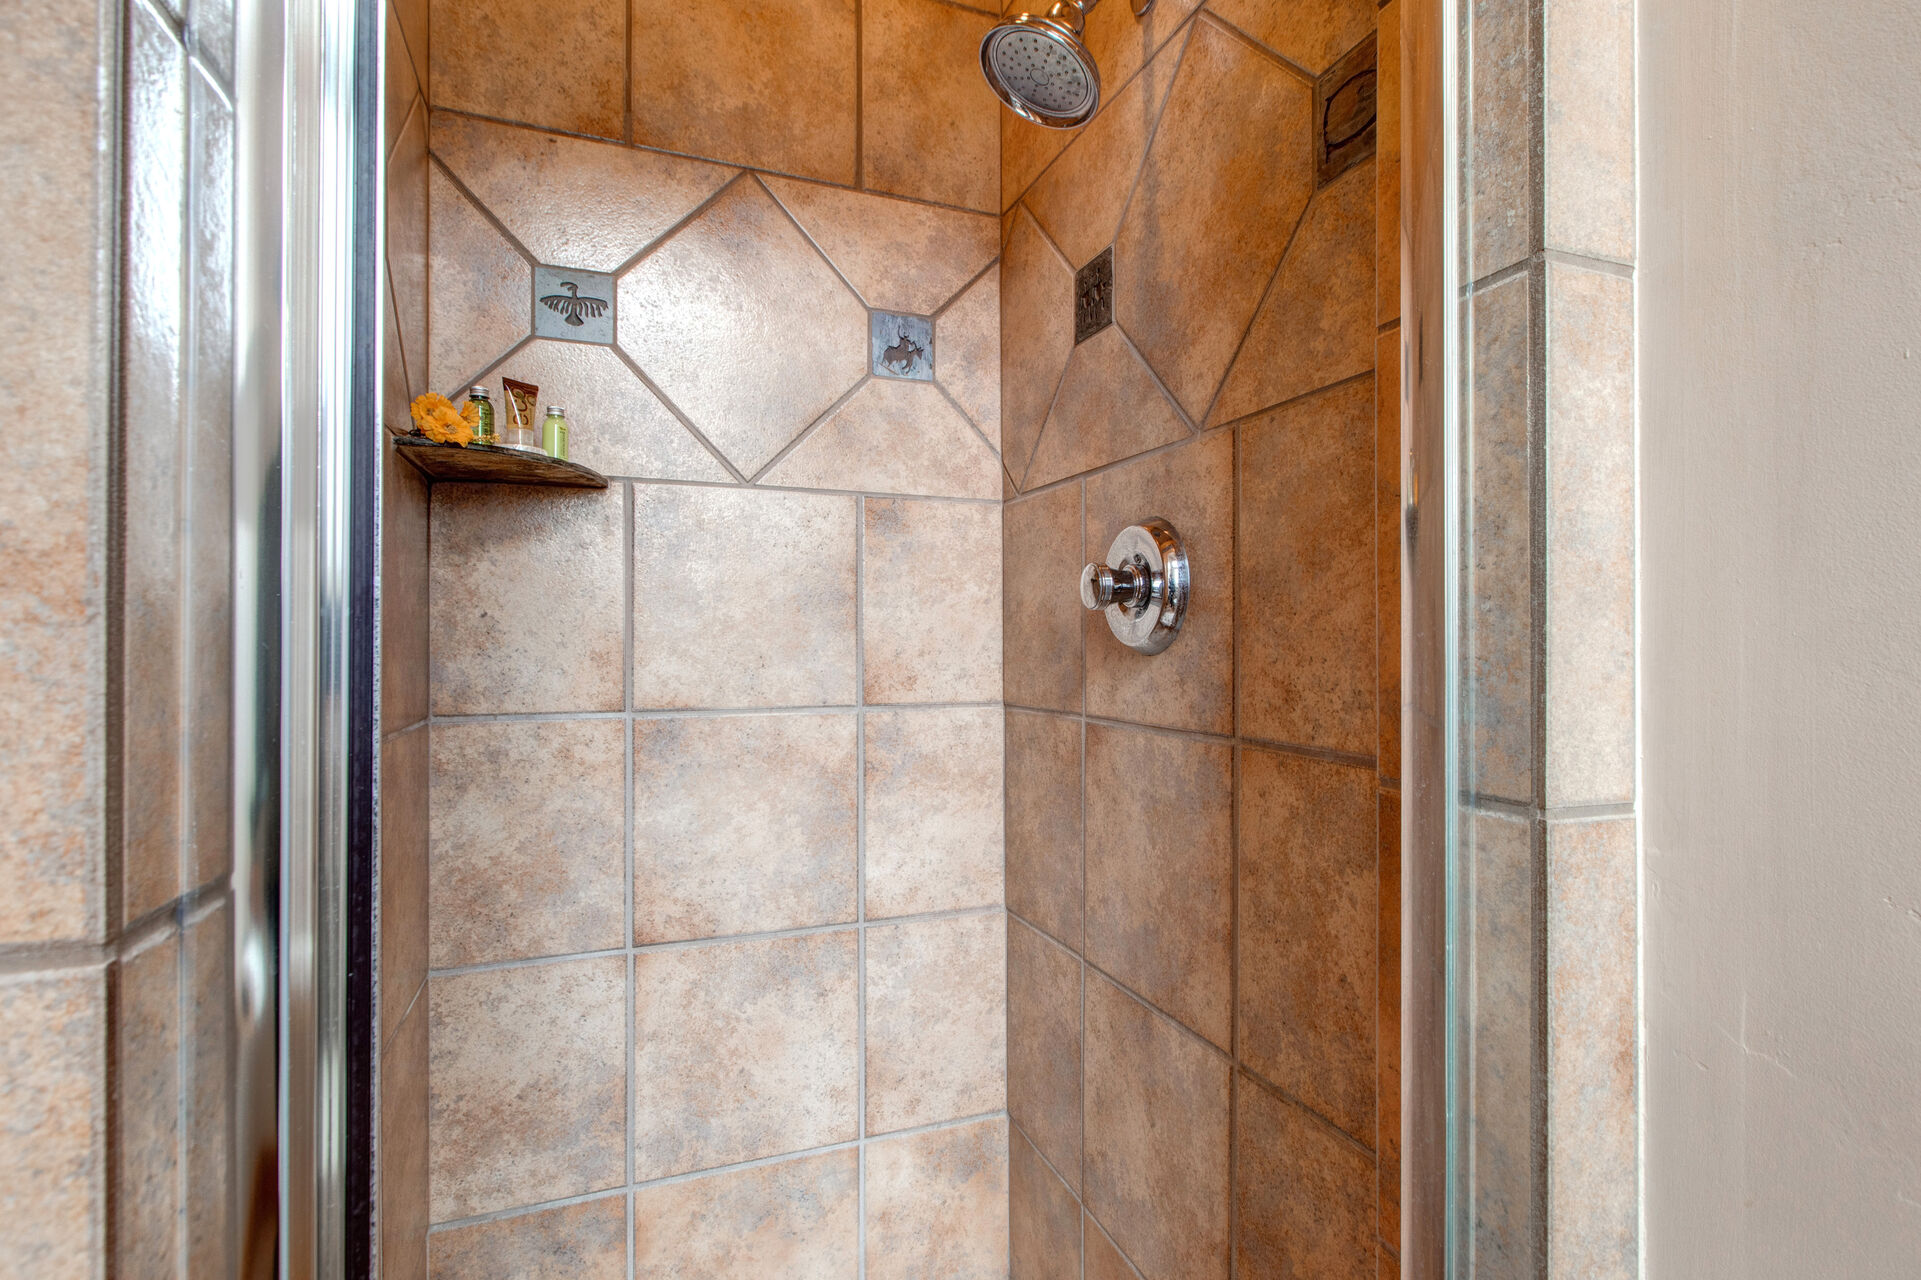 Bedroom 2 Bathroom with tiled shower